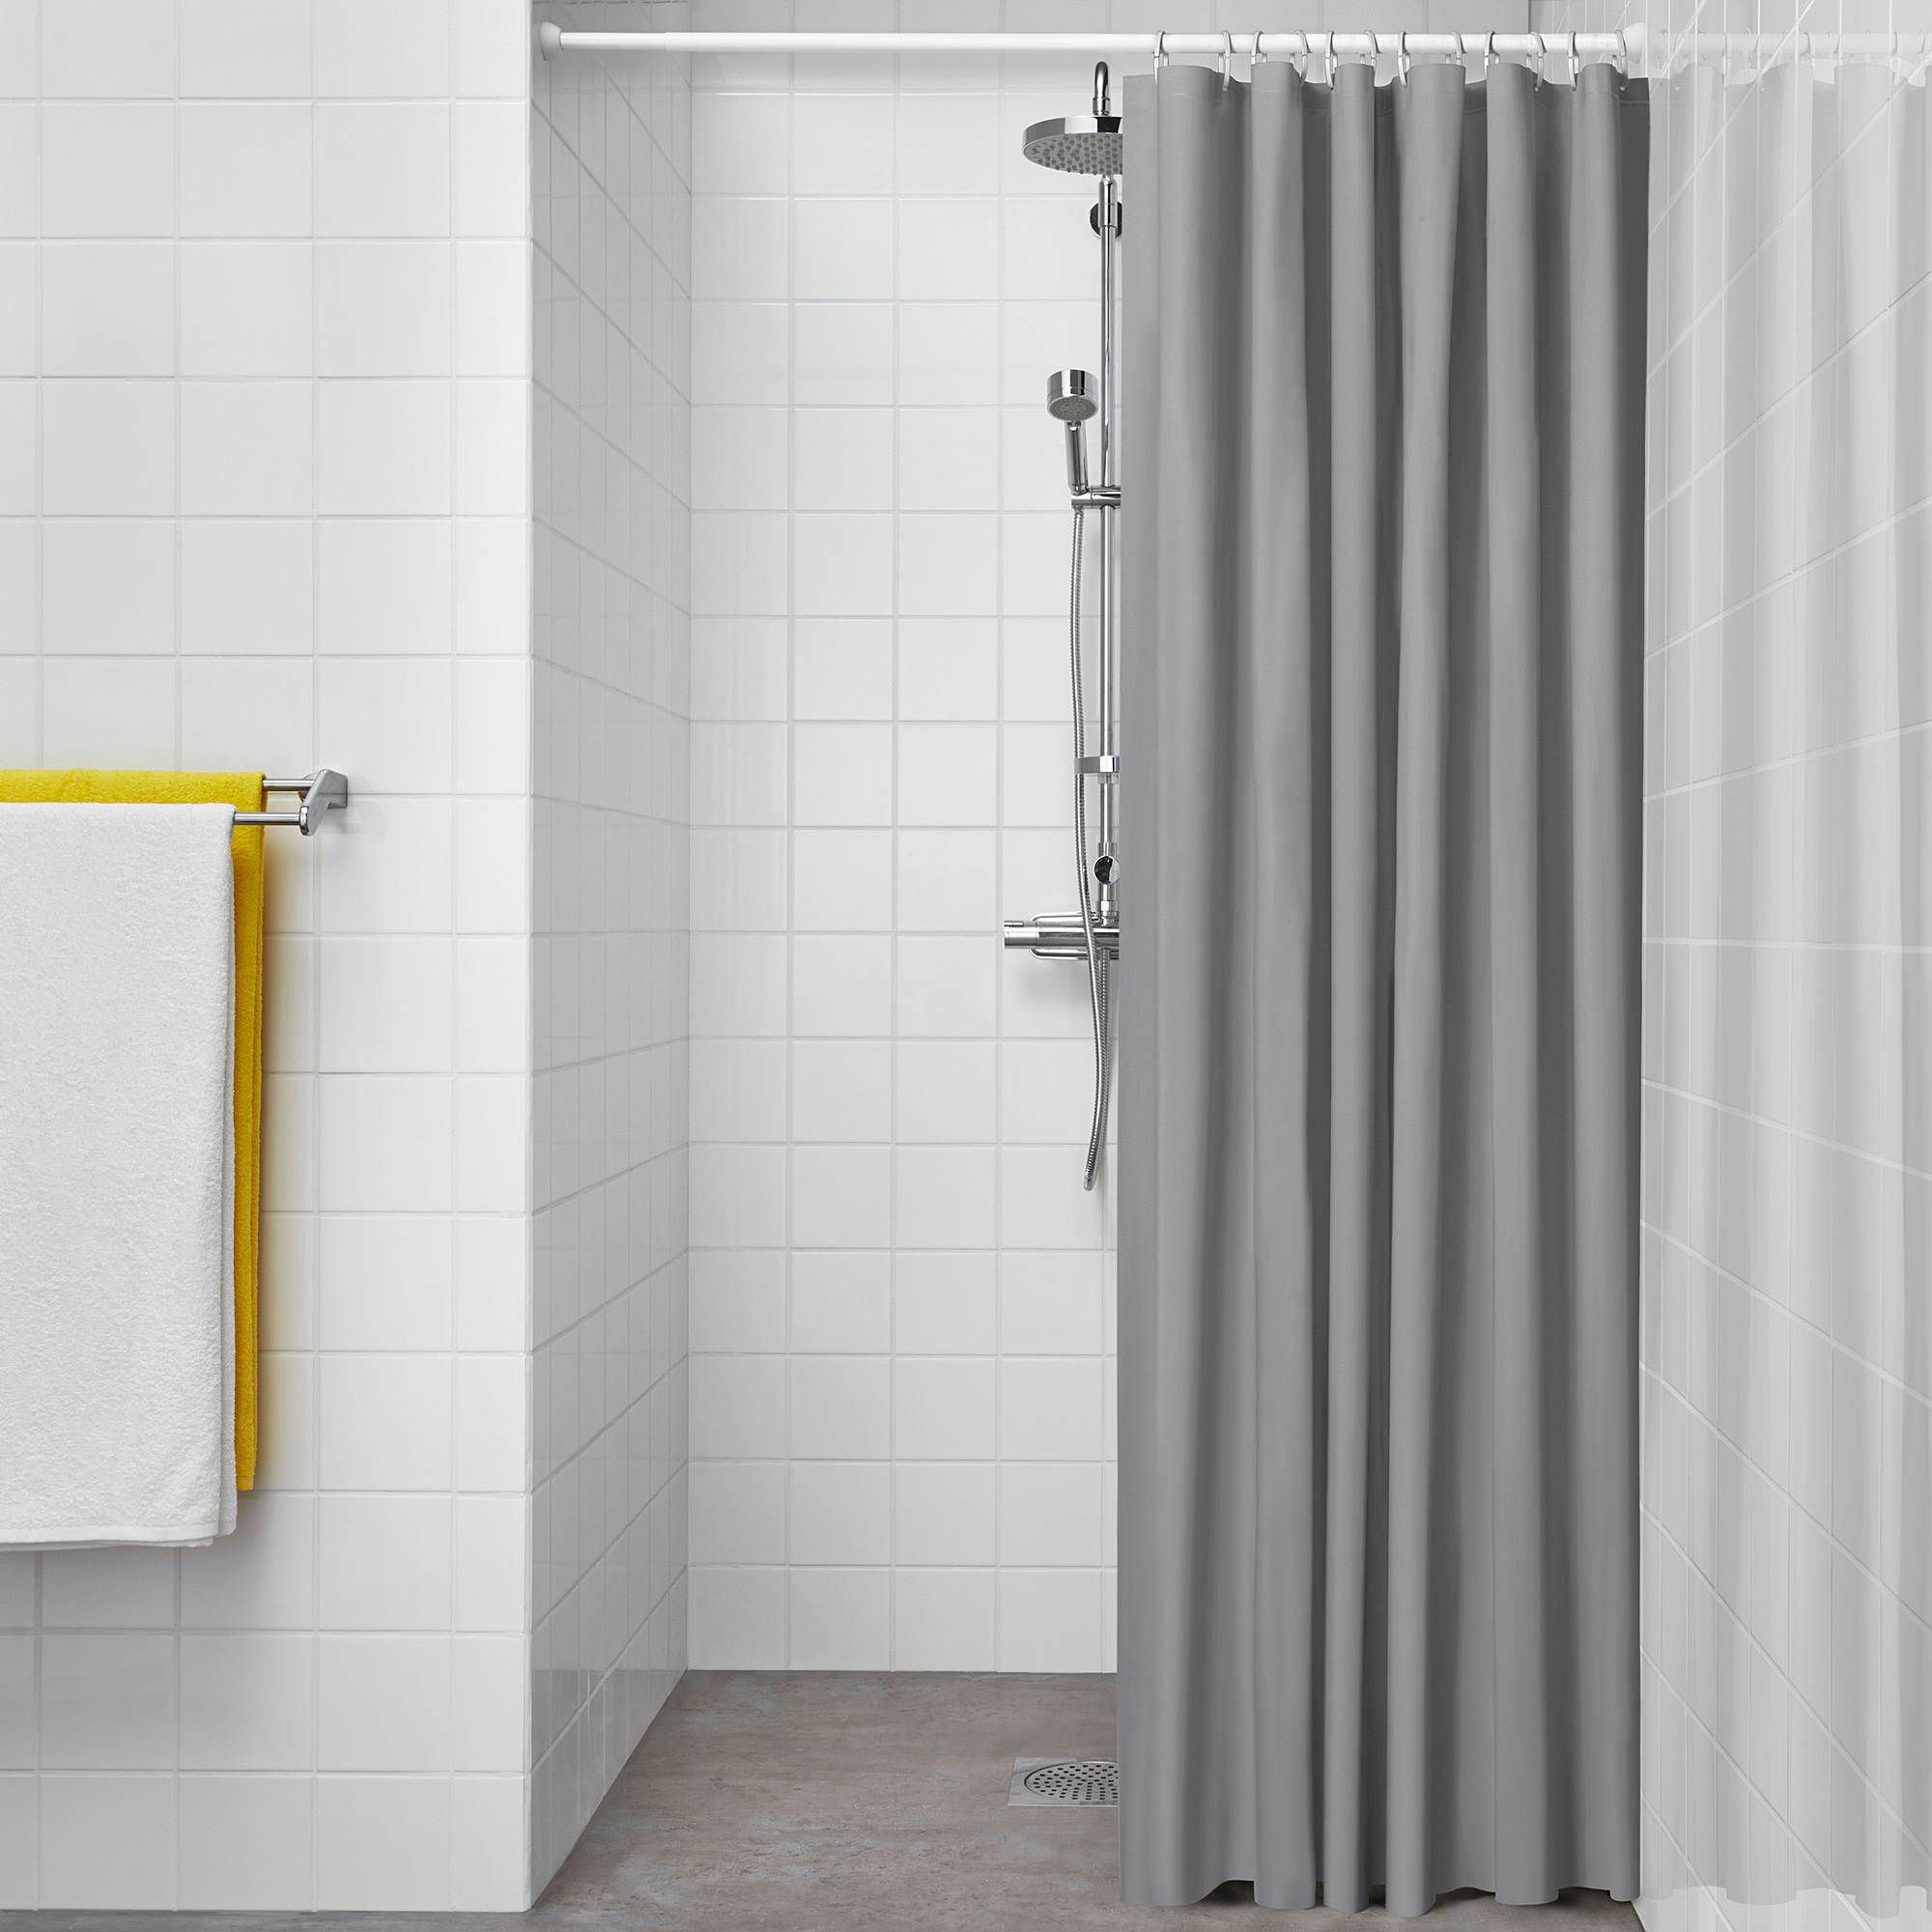 LUDDHAGTORN shower curtain